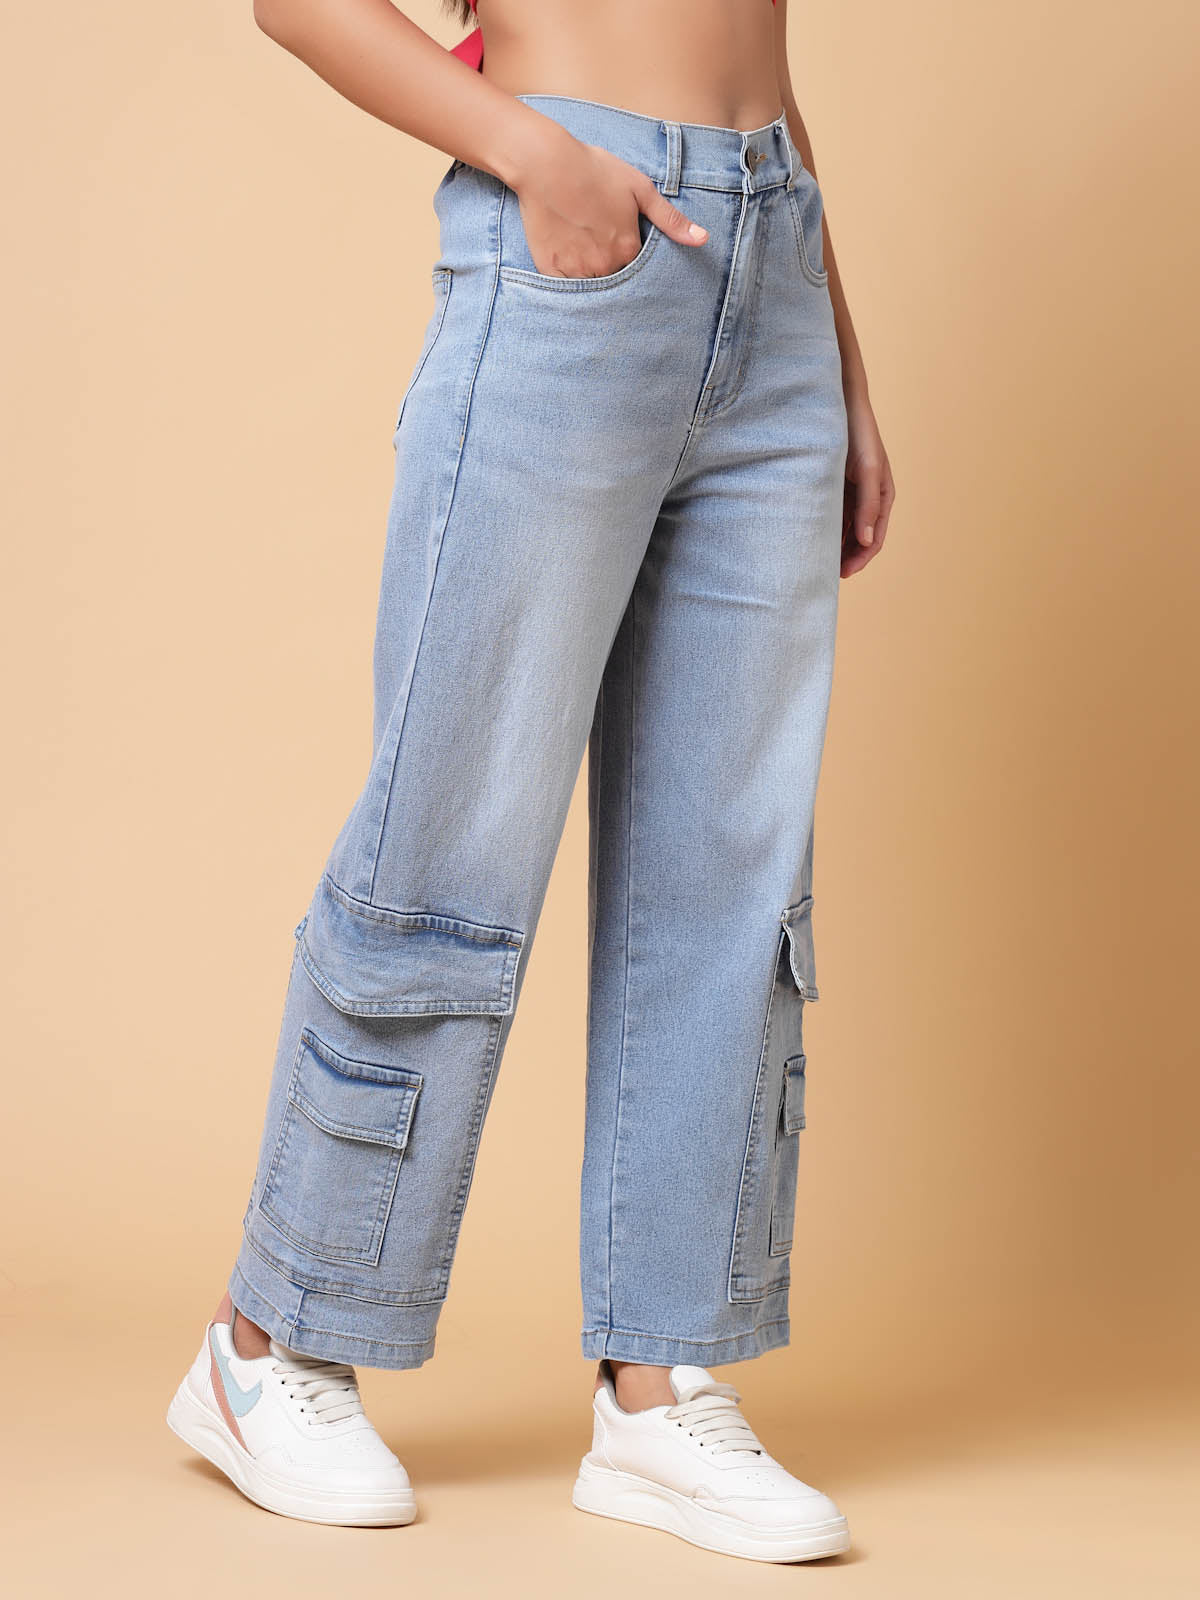 Lee Women's Jeans Classic Fit Dark Wash Heavy Denim Size 12 Med 31